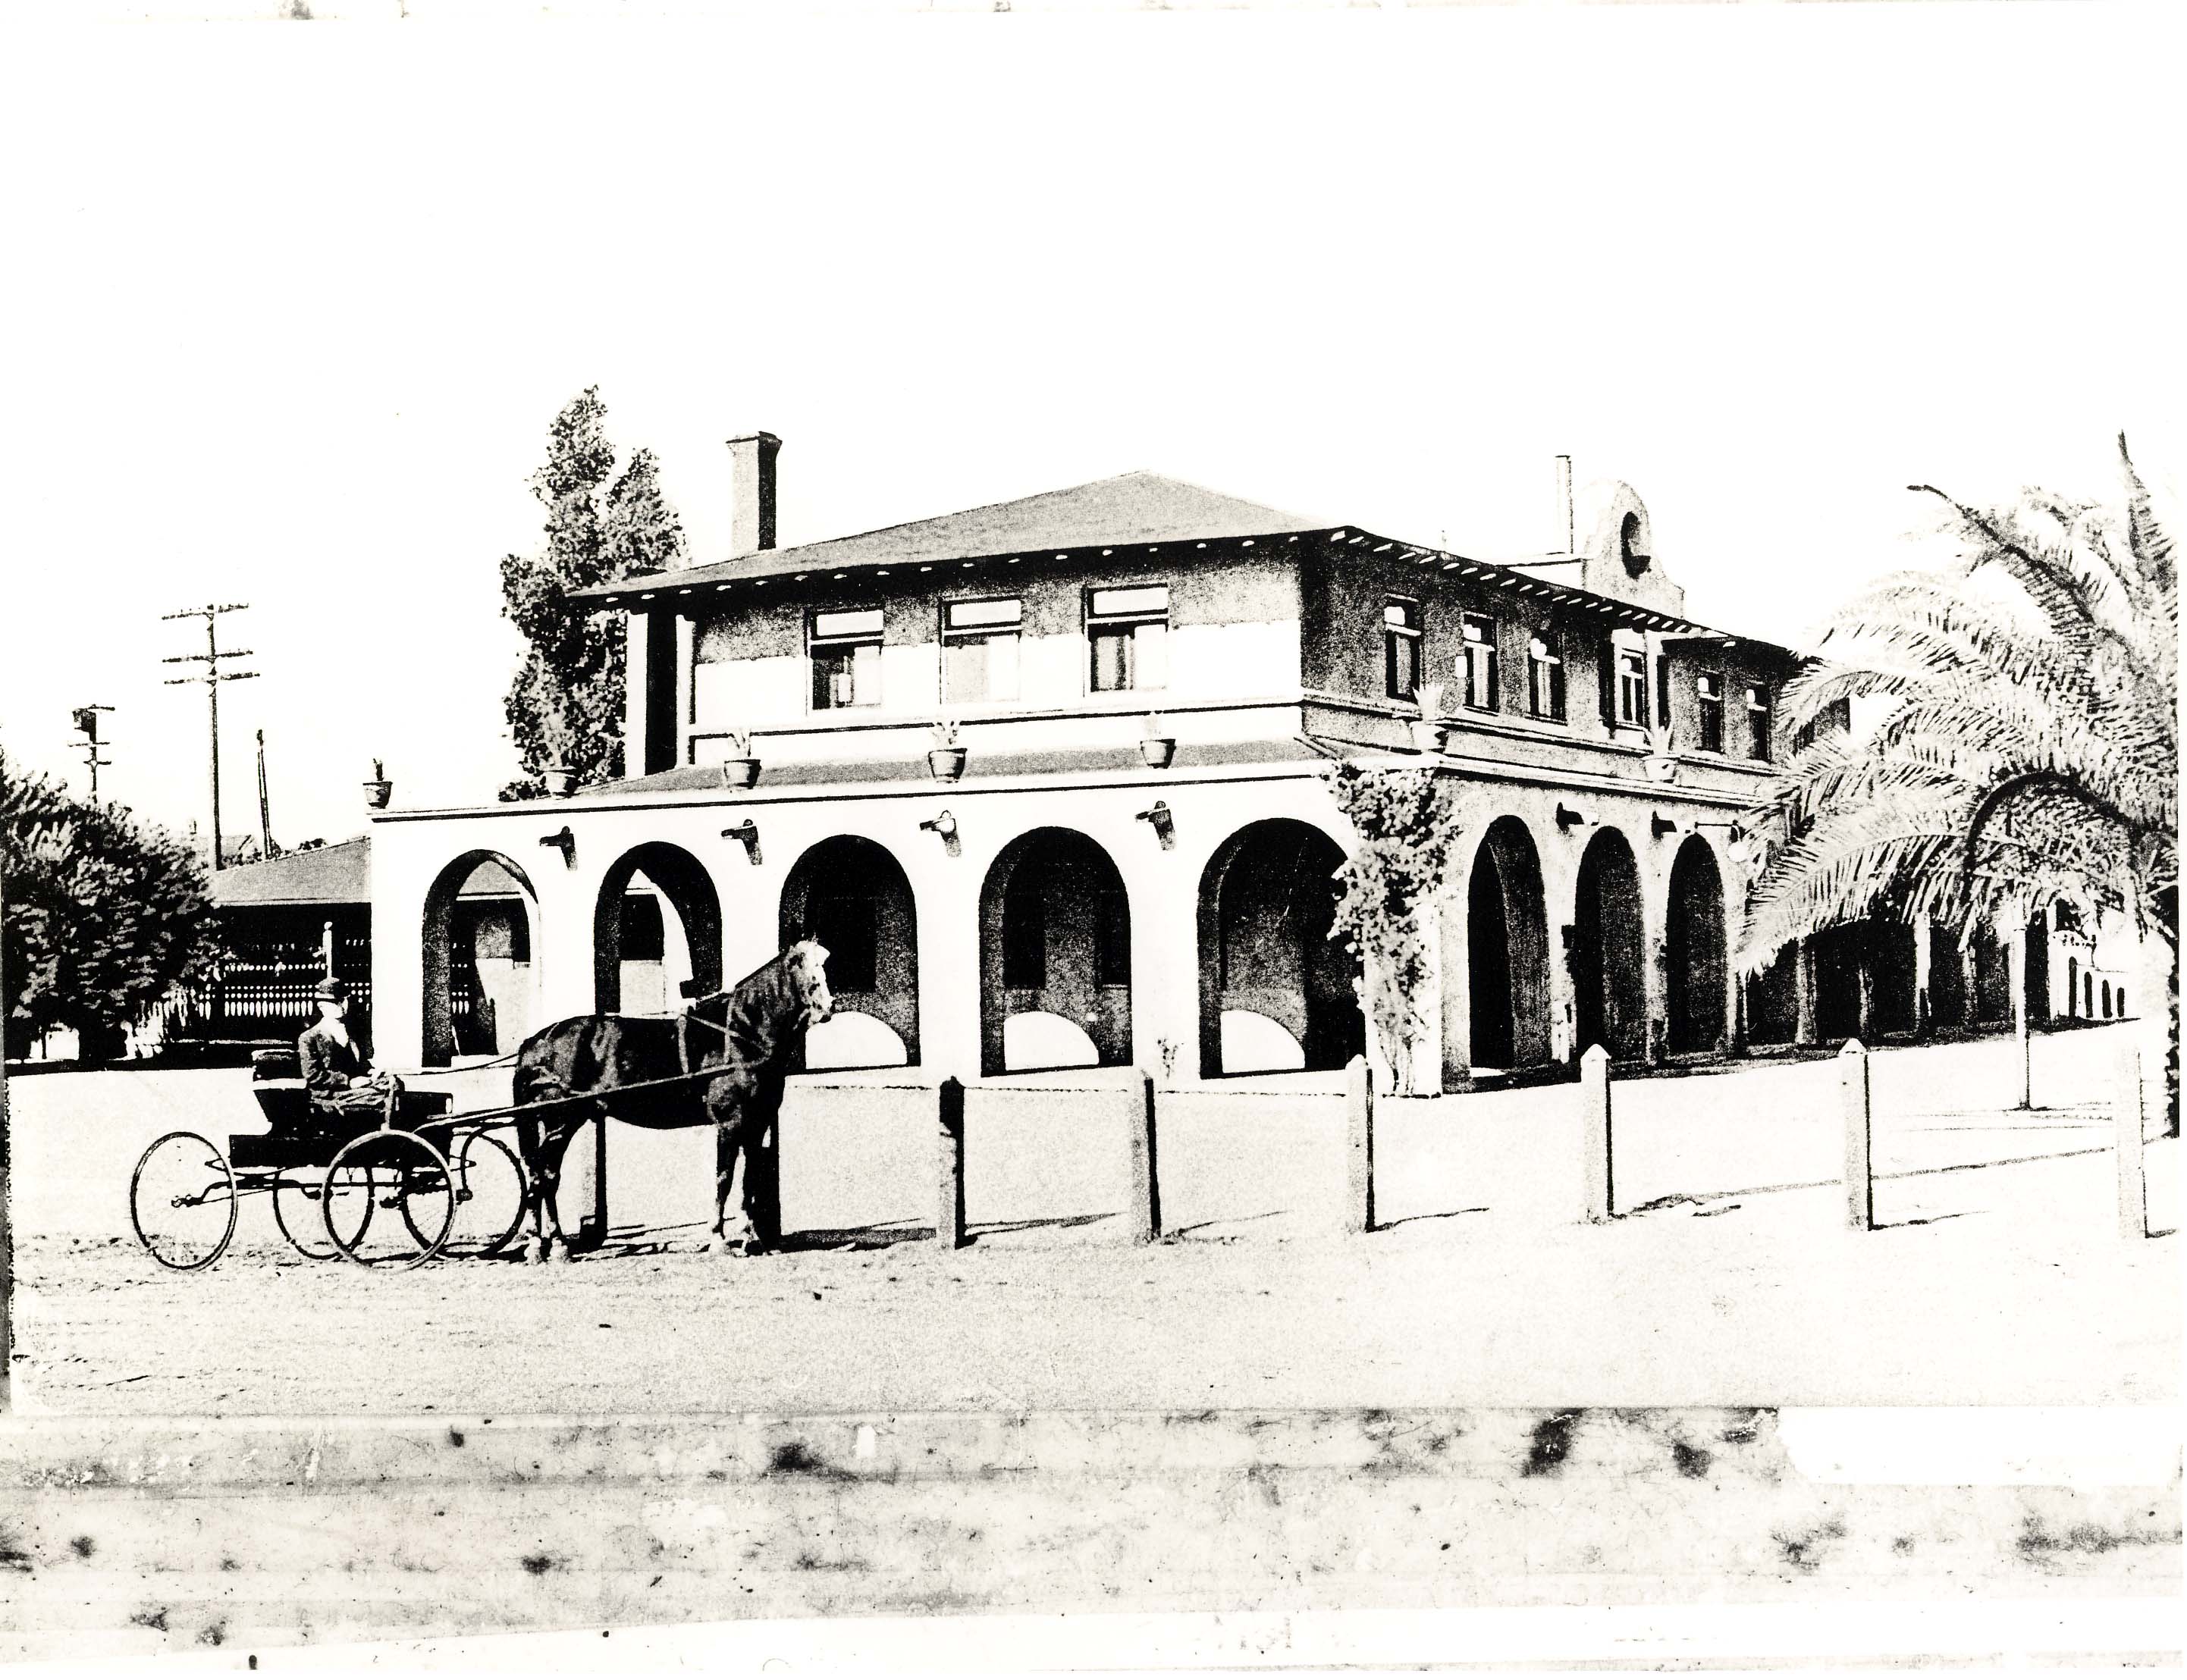 Fred Harvey's Eating House on the Santa Fe Railway in Merced